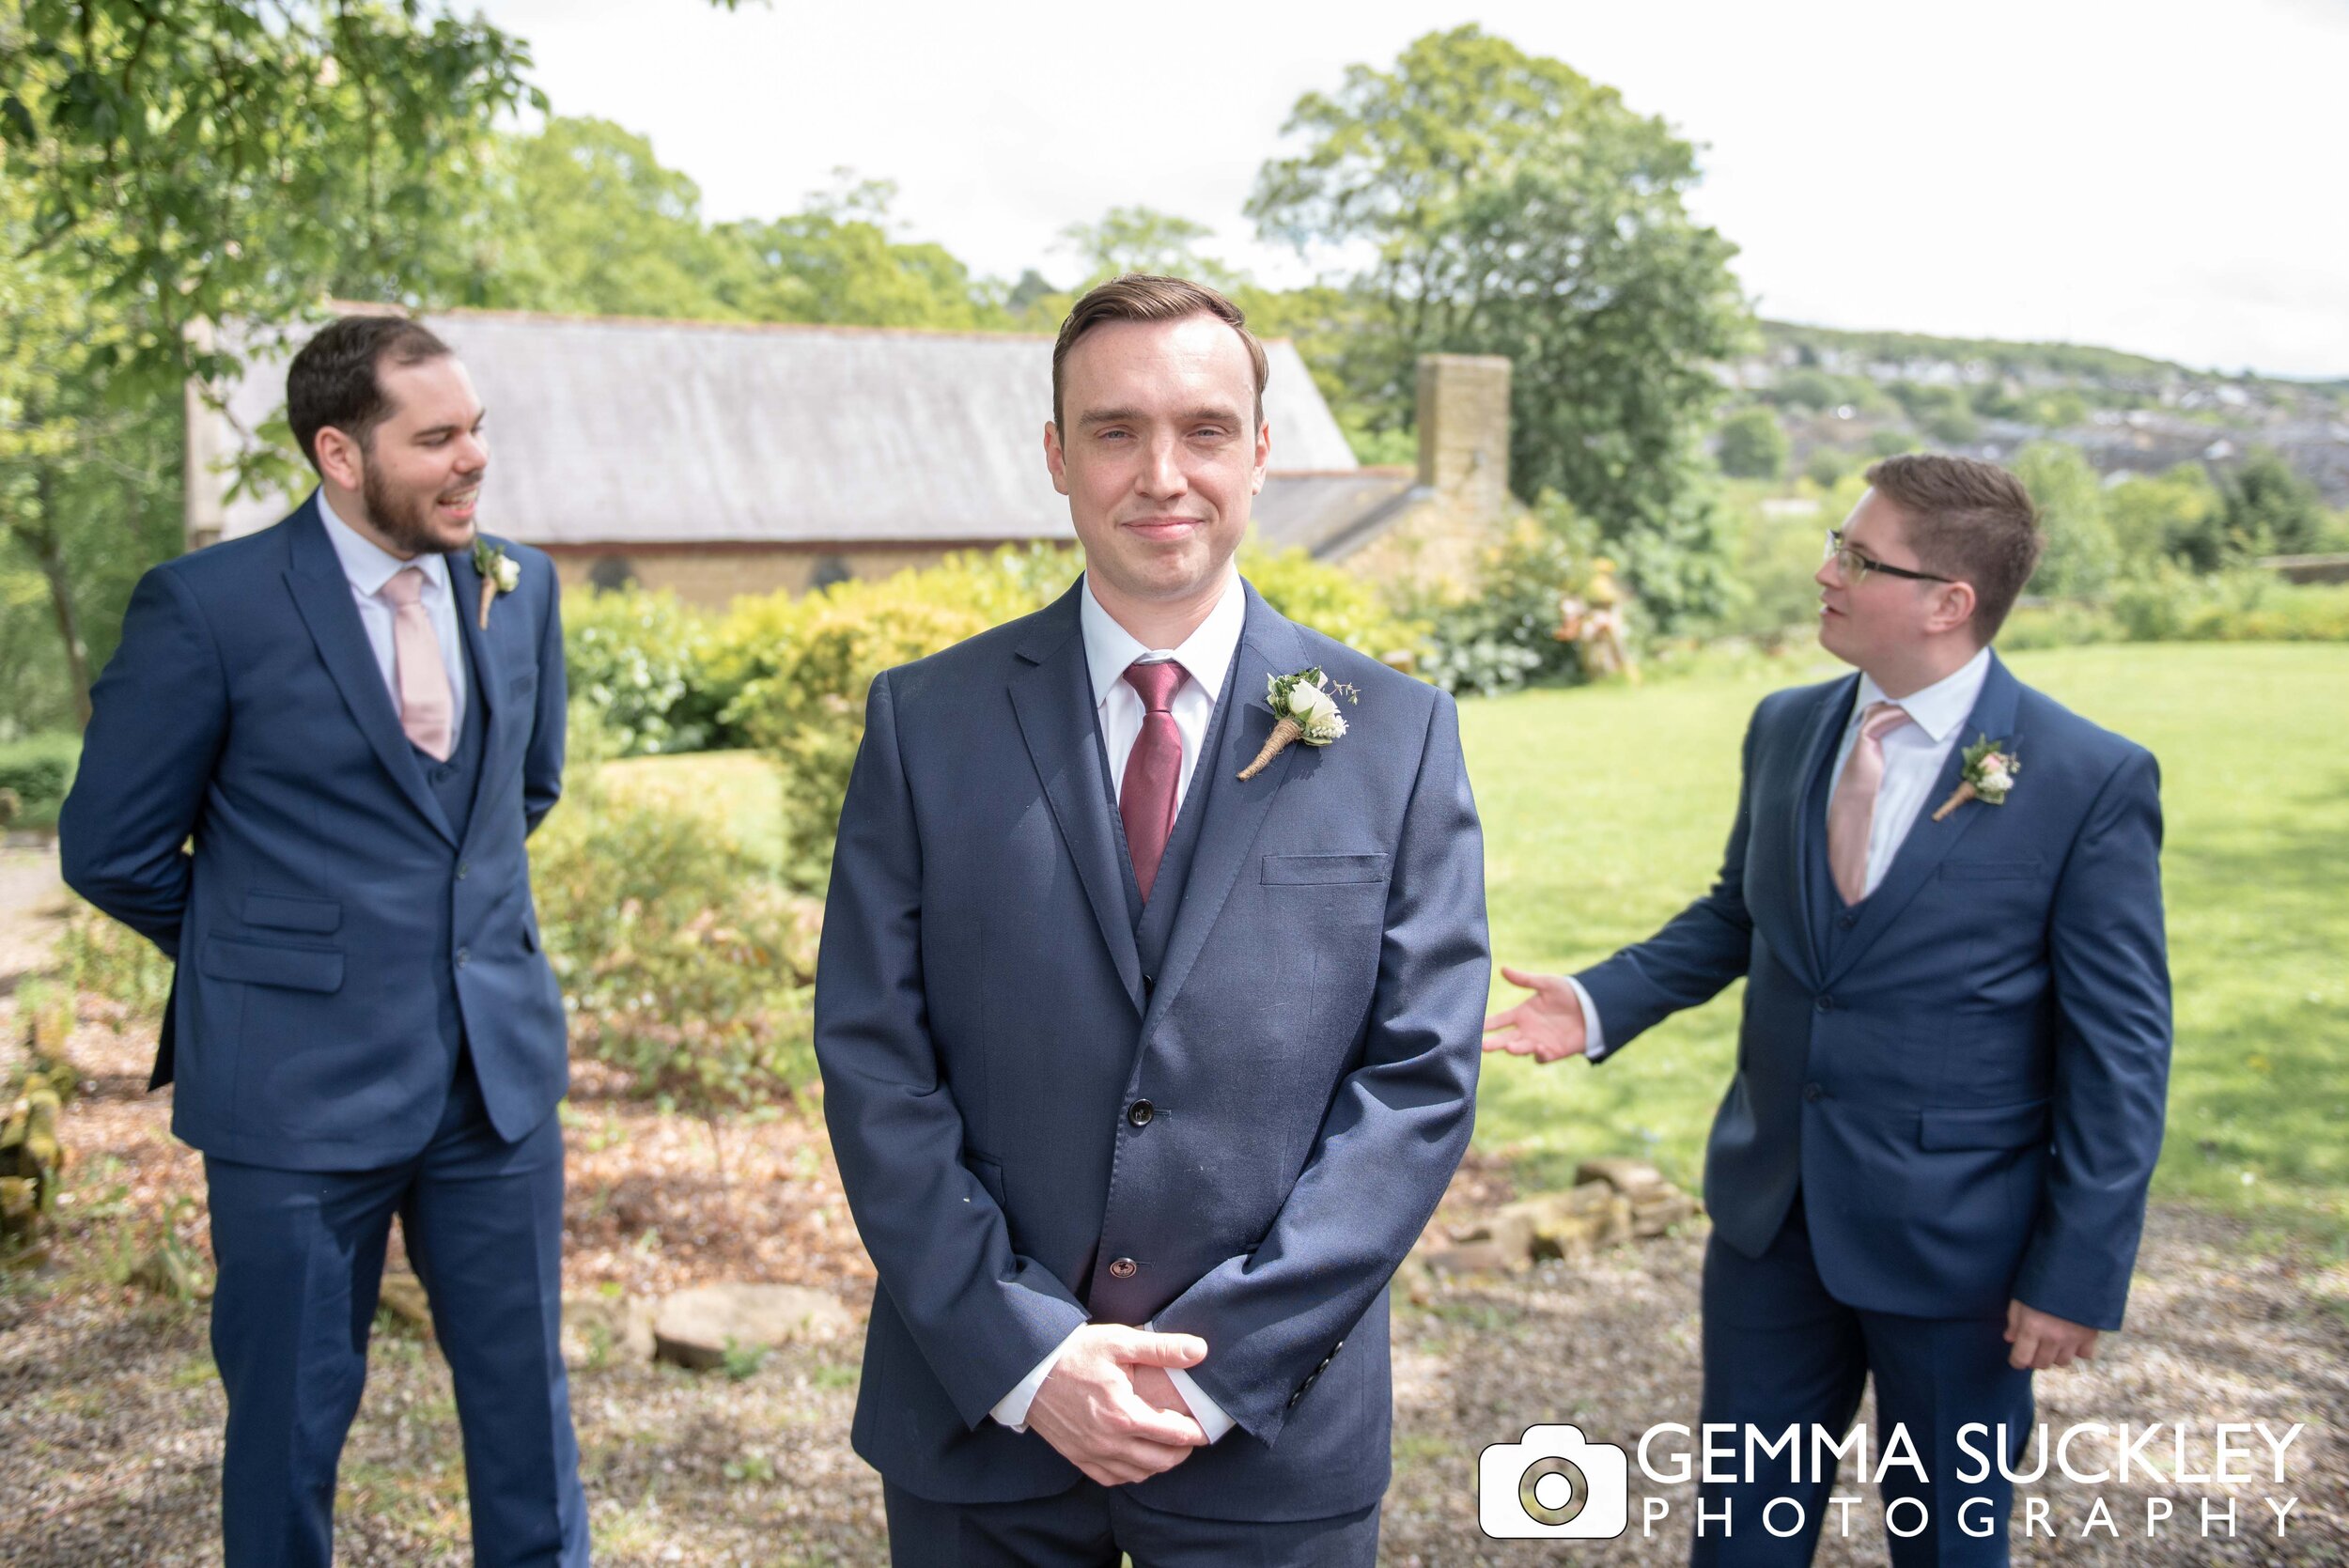 fum photo of the groom with the groomsmen